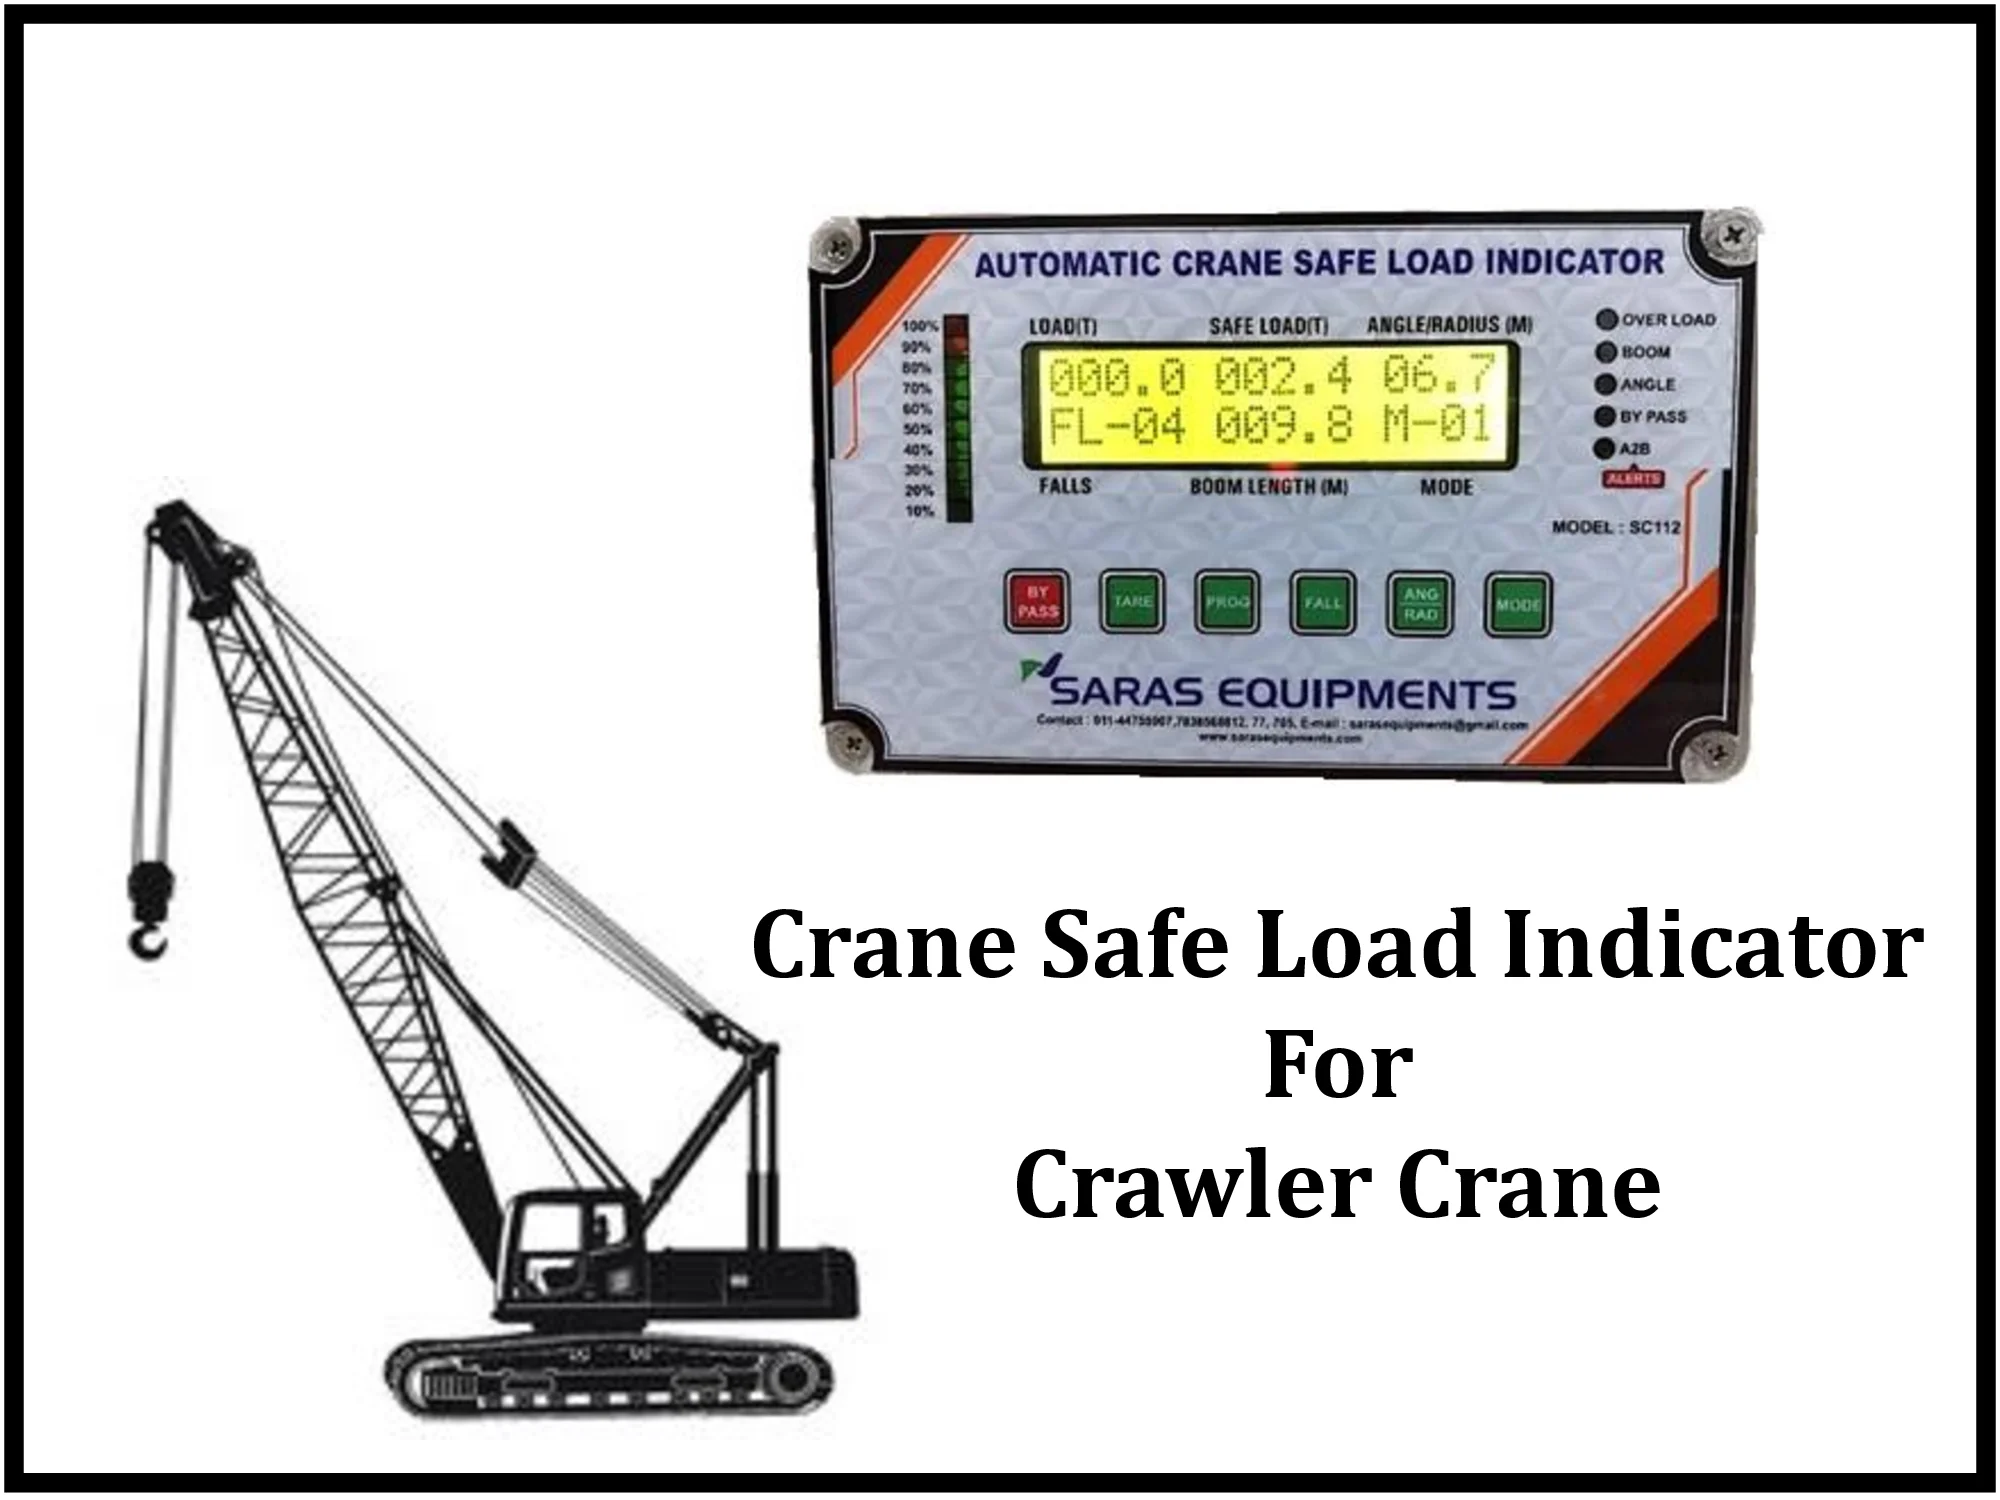 Crane Safe Load Indicator for Hydra crane in Bangalore